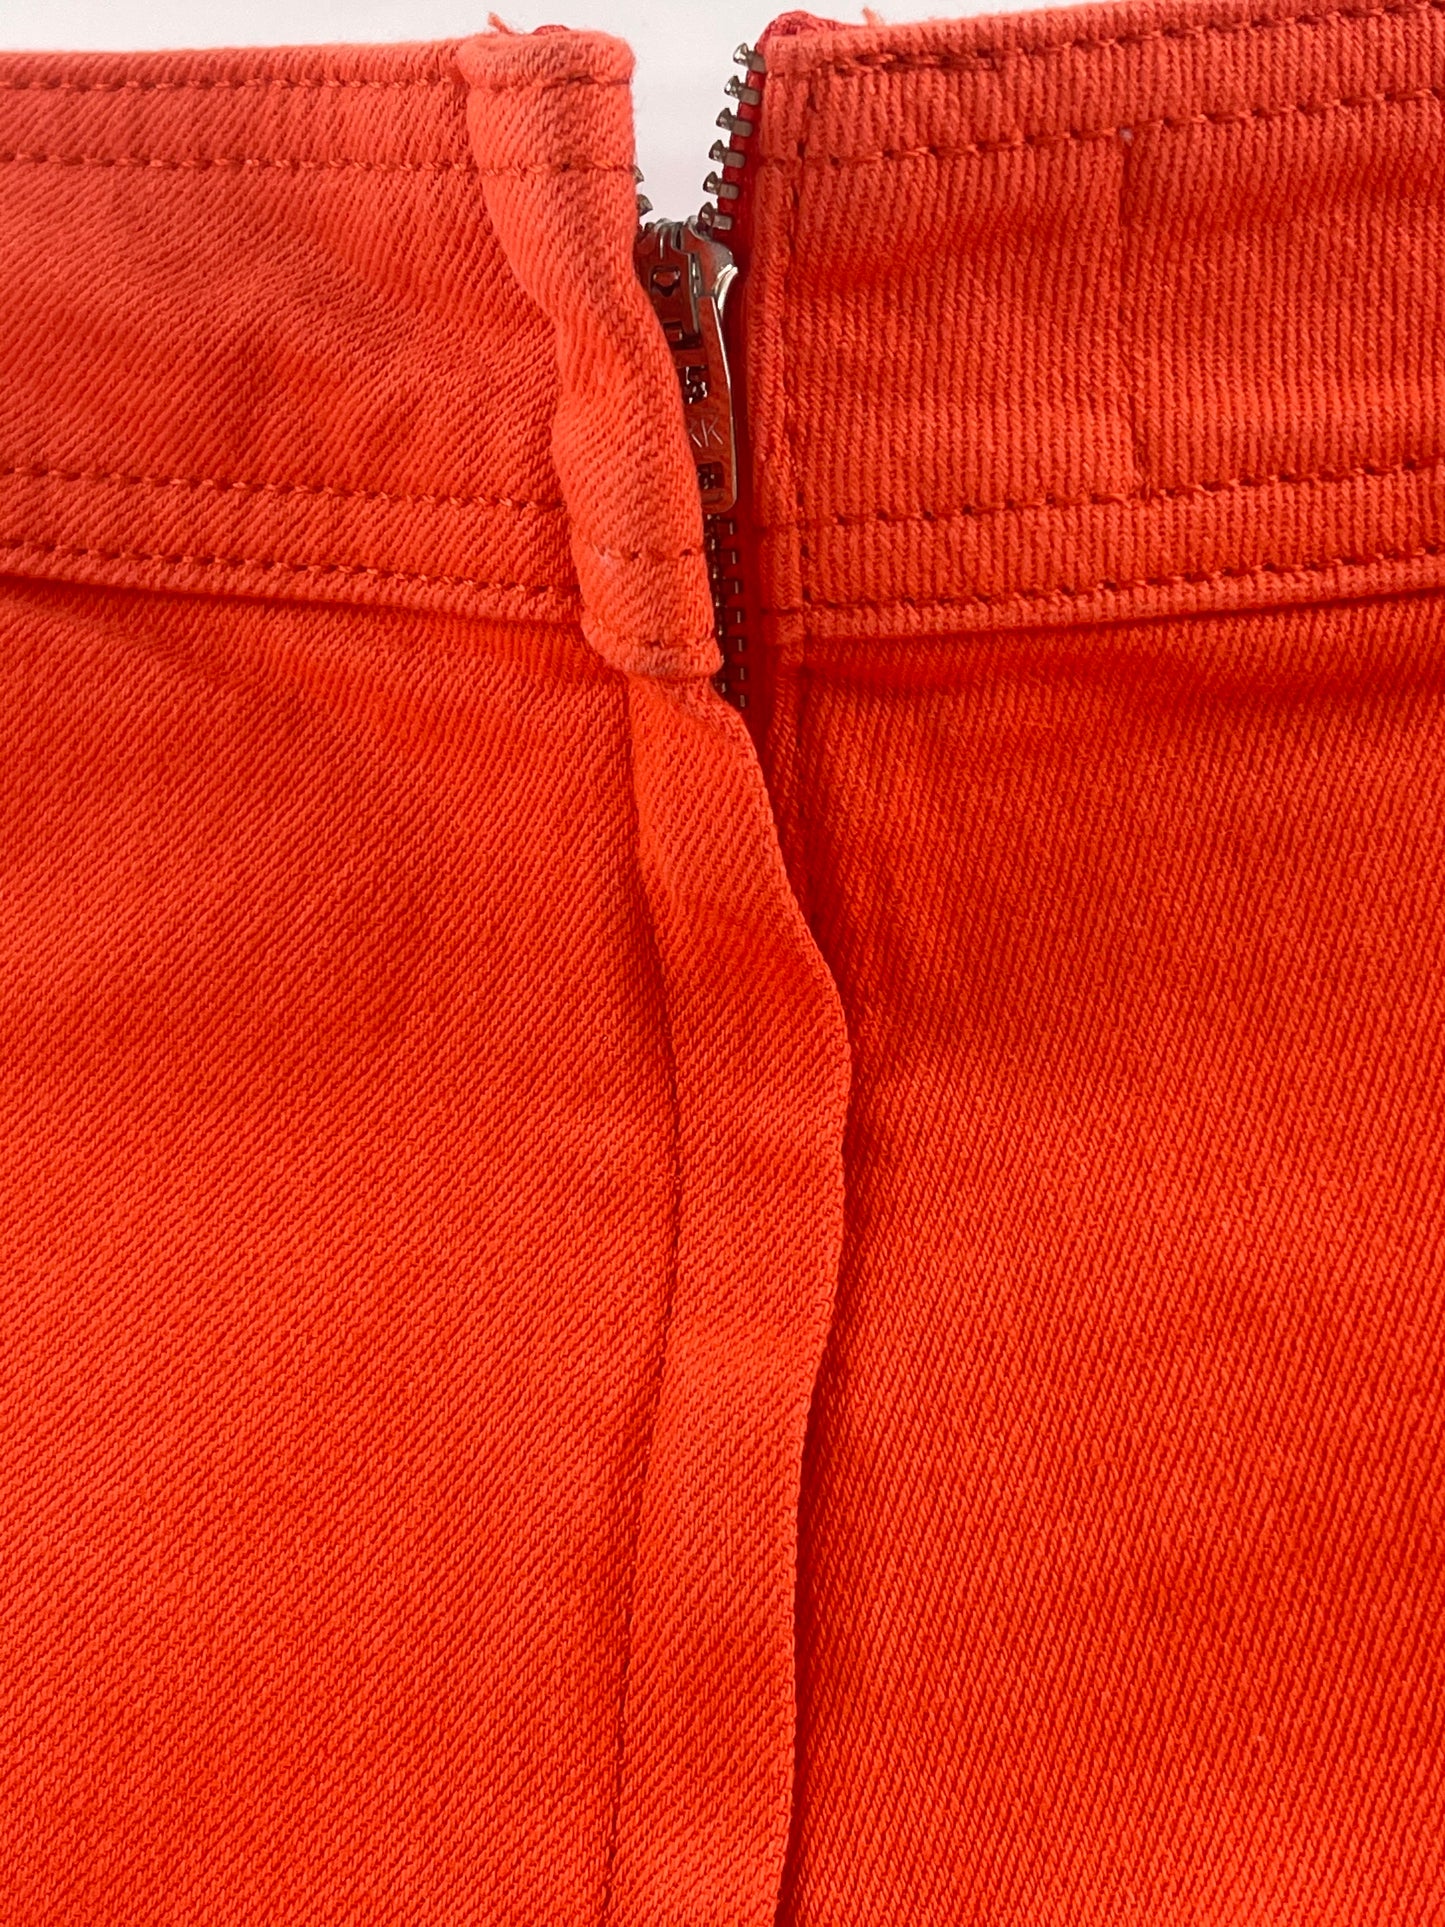 BDG Orange Jeans (Size W 31)